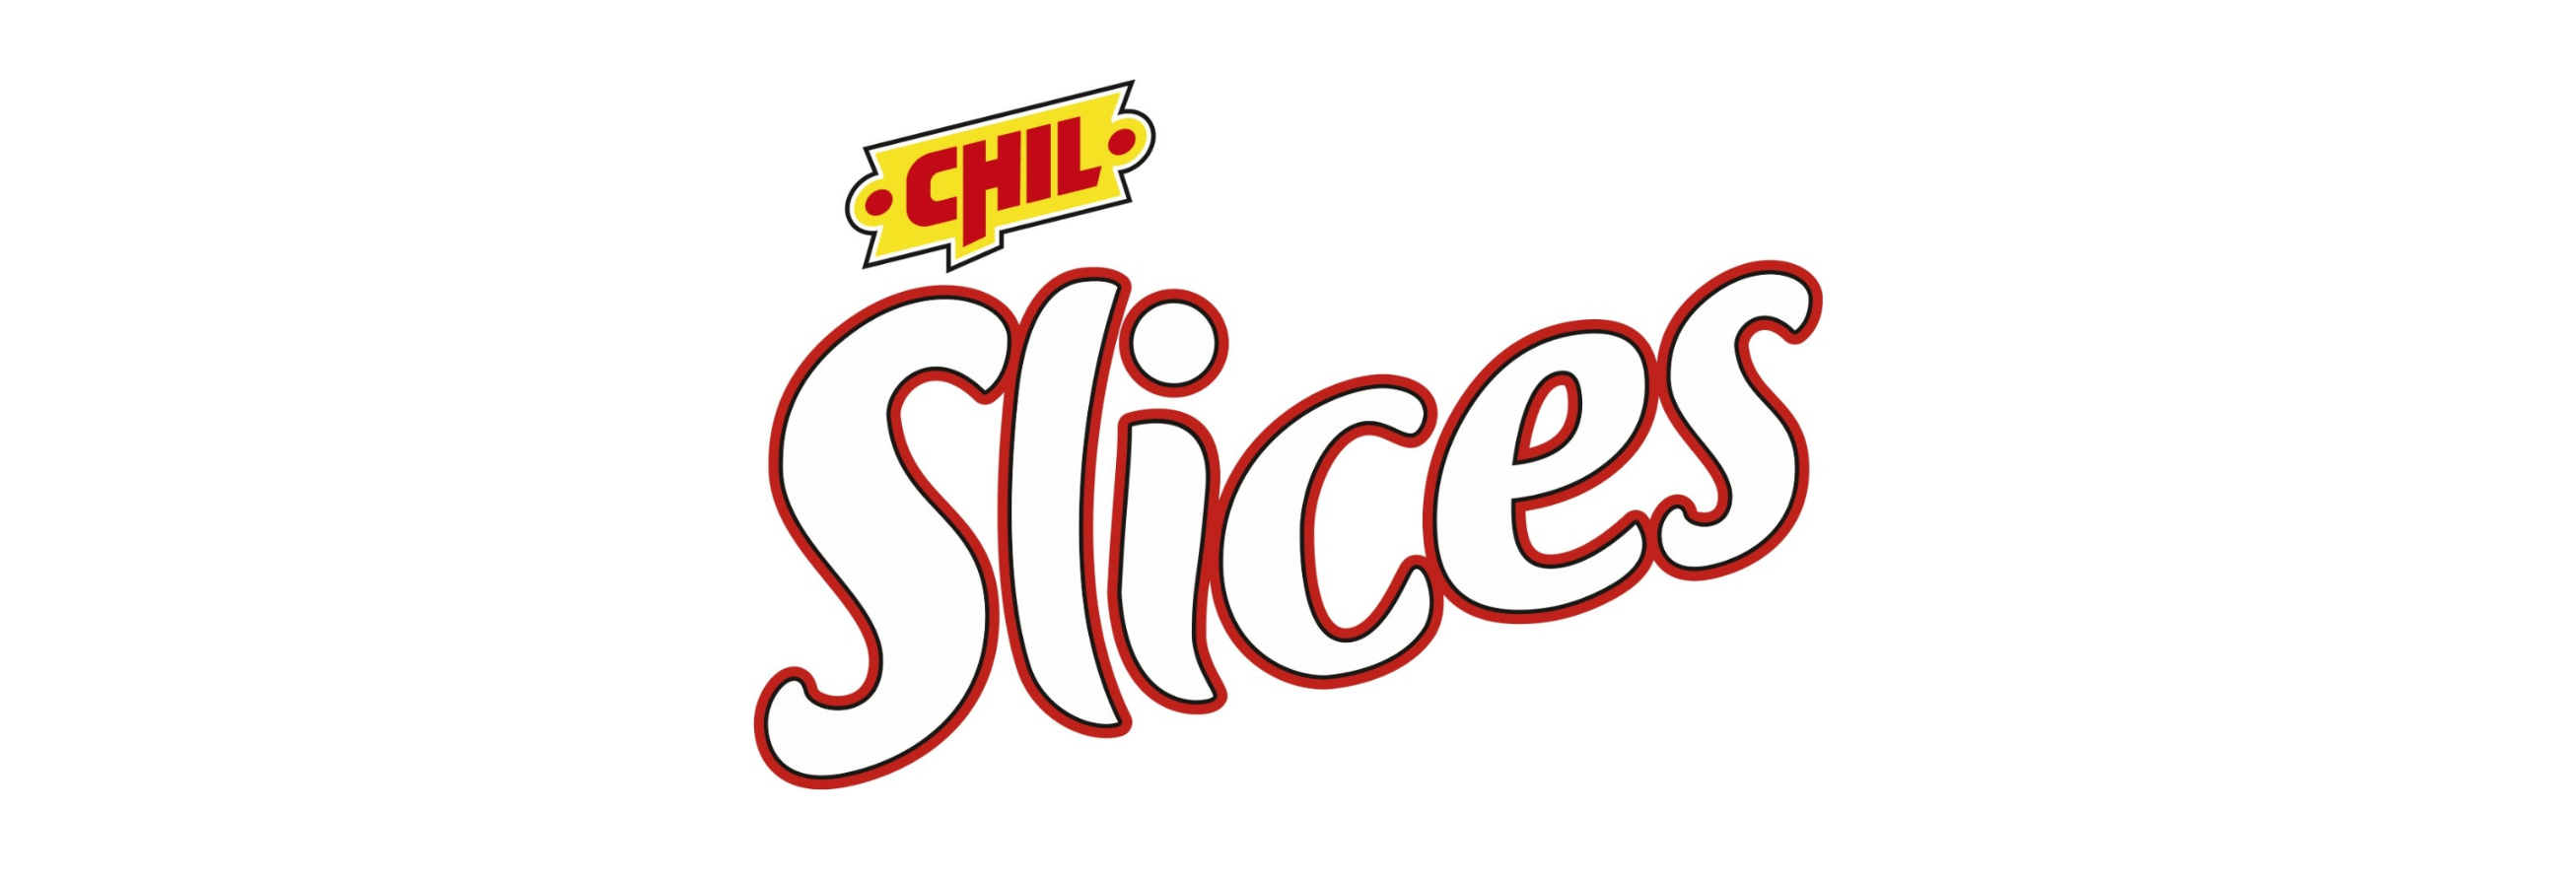 Slices chil